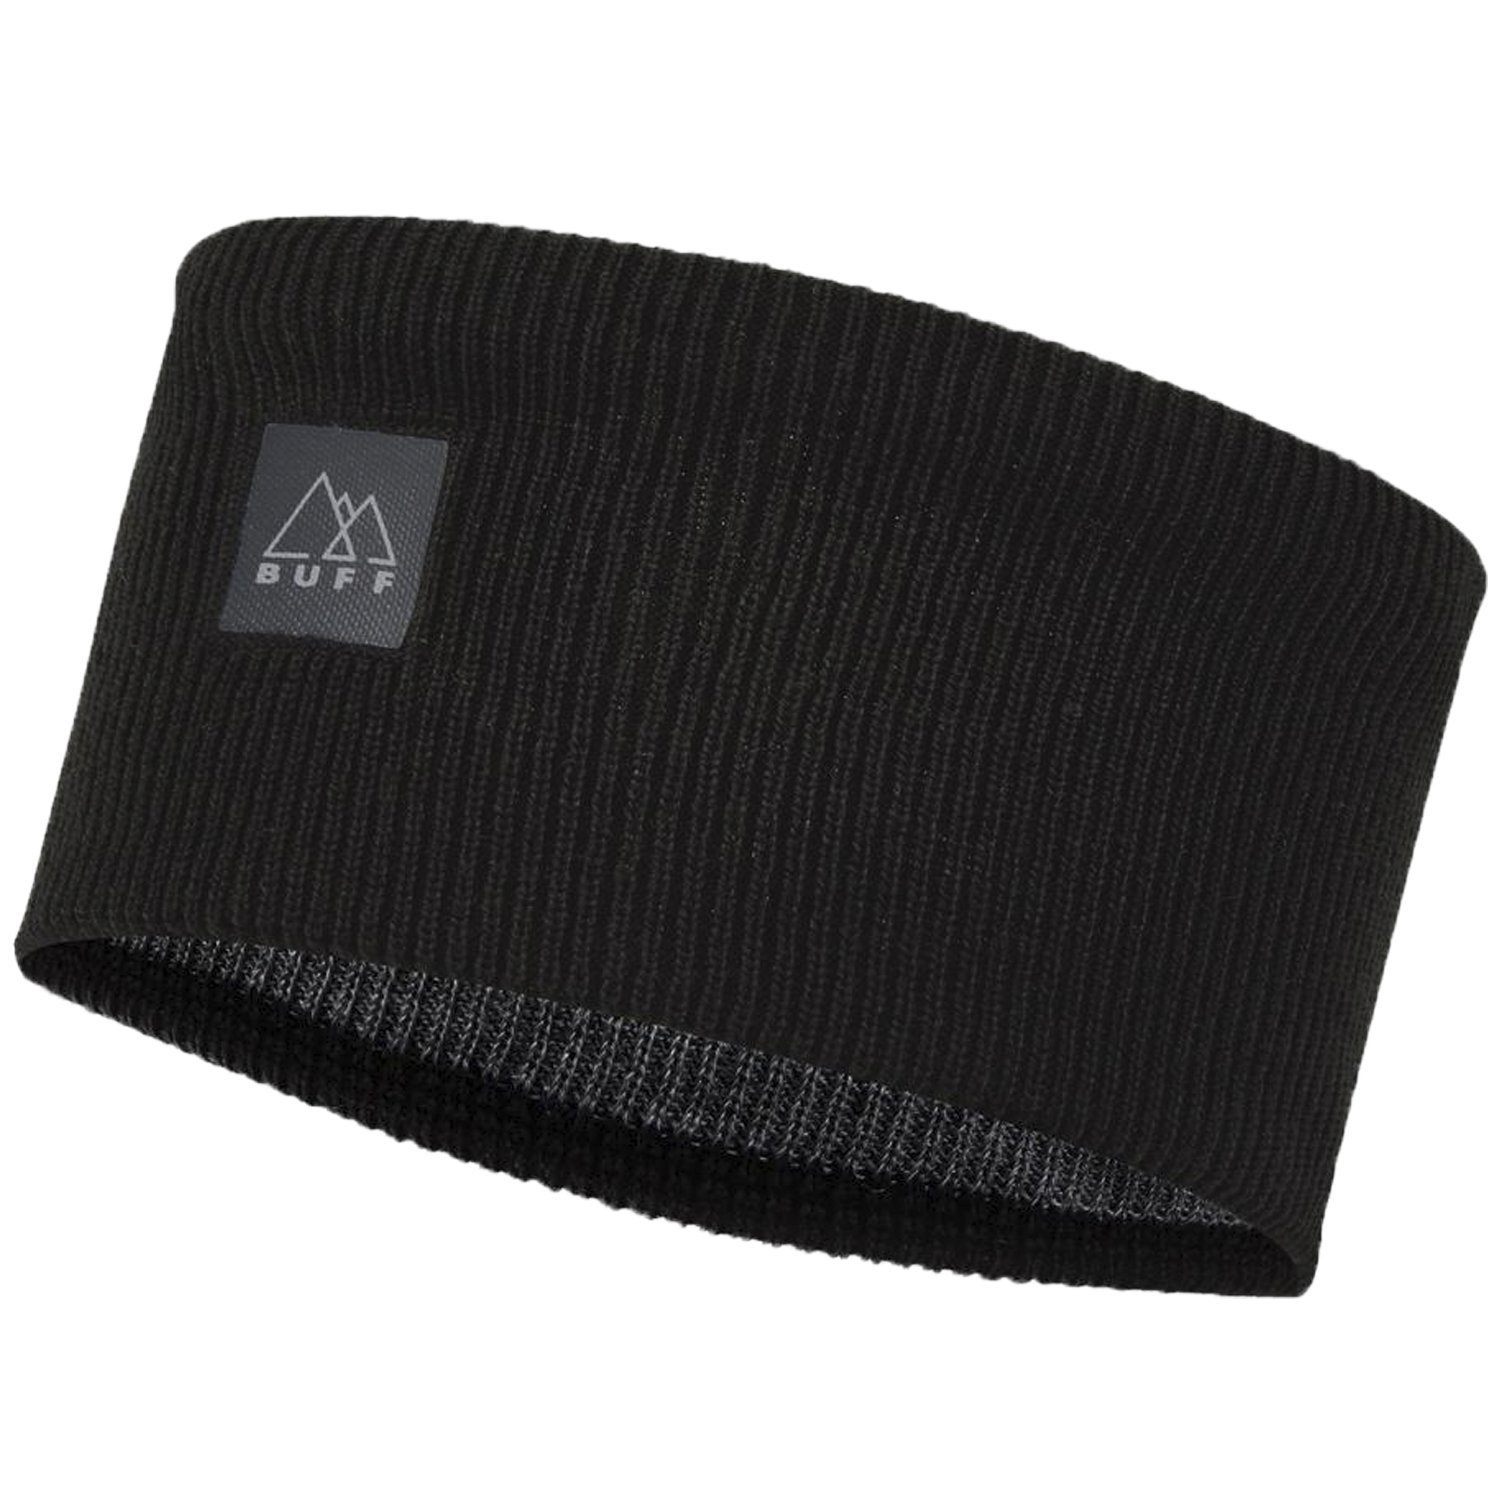 Повязка Buff Crossknit Headband Solid Black, 126484.999.10.00 купить на ЖДБЗ.ру - фотография № 1